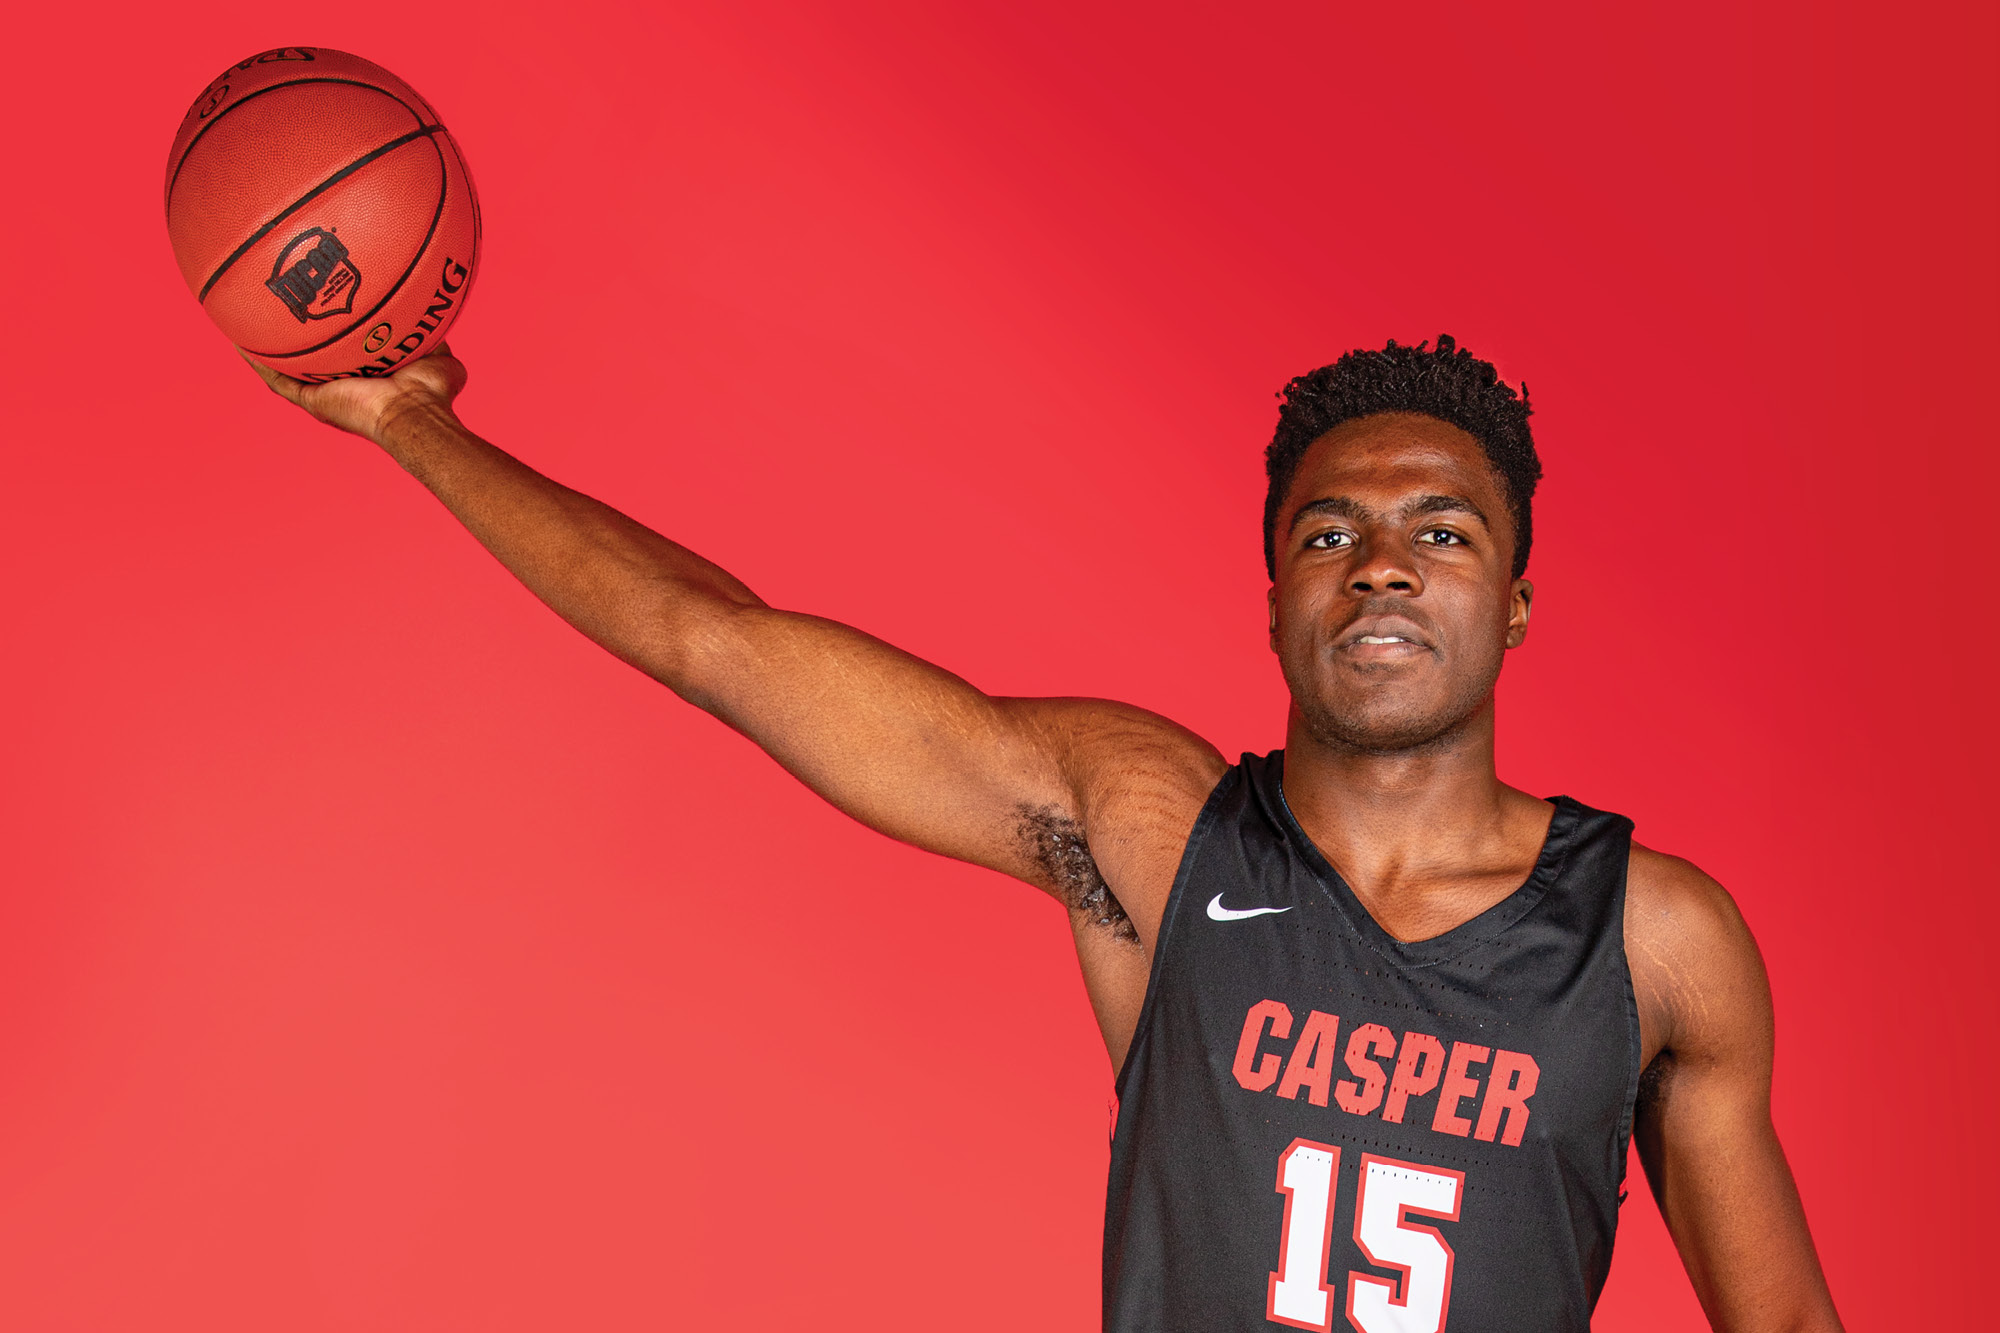 Photo of Casper College Basketball player Philip Pepple Jr.